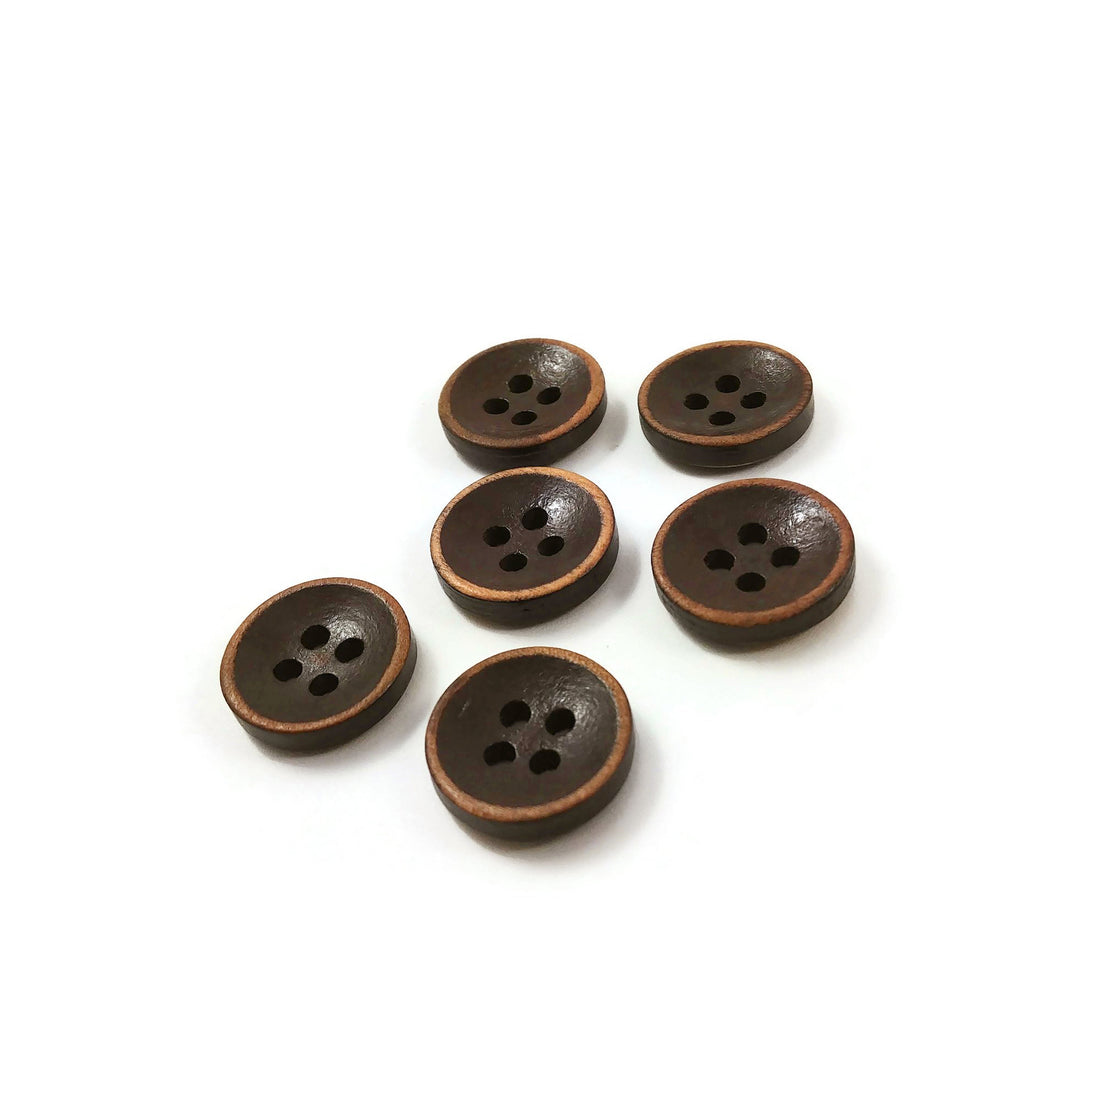 Dark brown button 15mm - set of 6 wood buttons